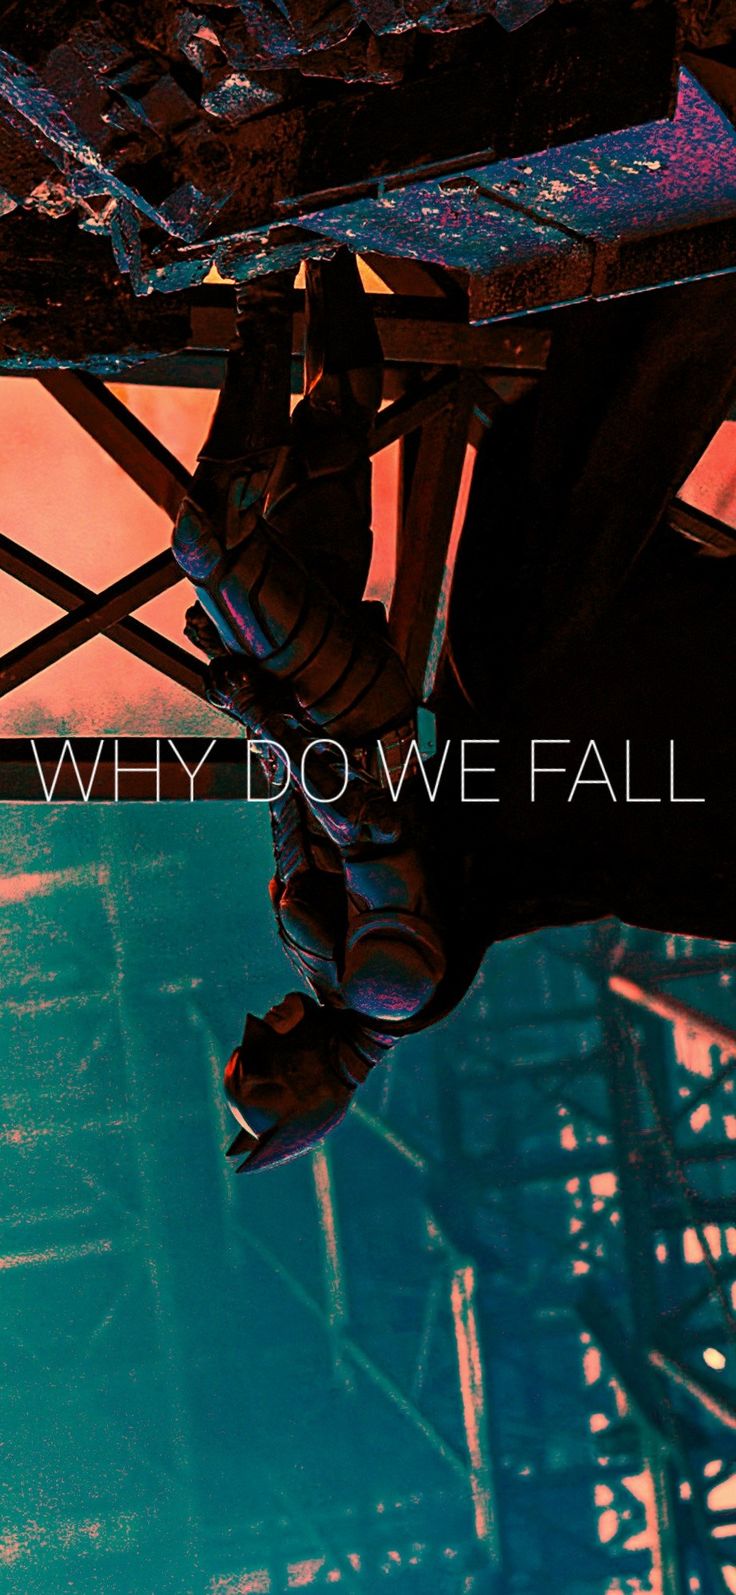 BATMAN WHY DO WE FALL WALLPAPER. Fall wallpaper, Google image, Image search